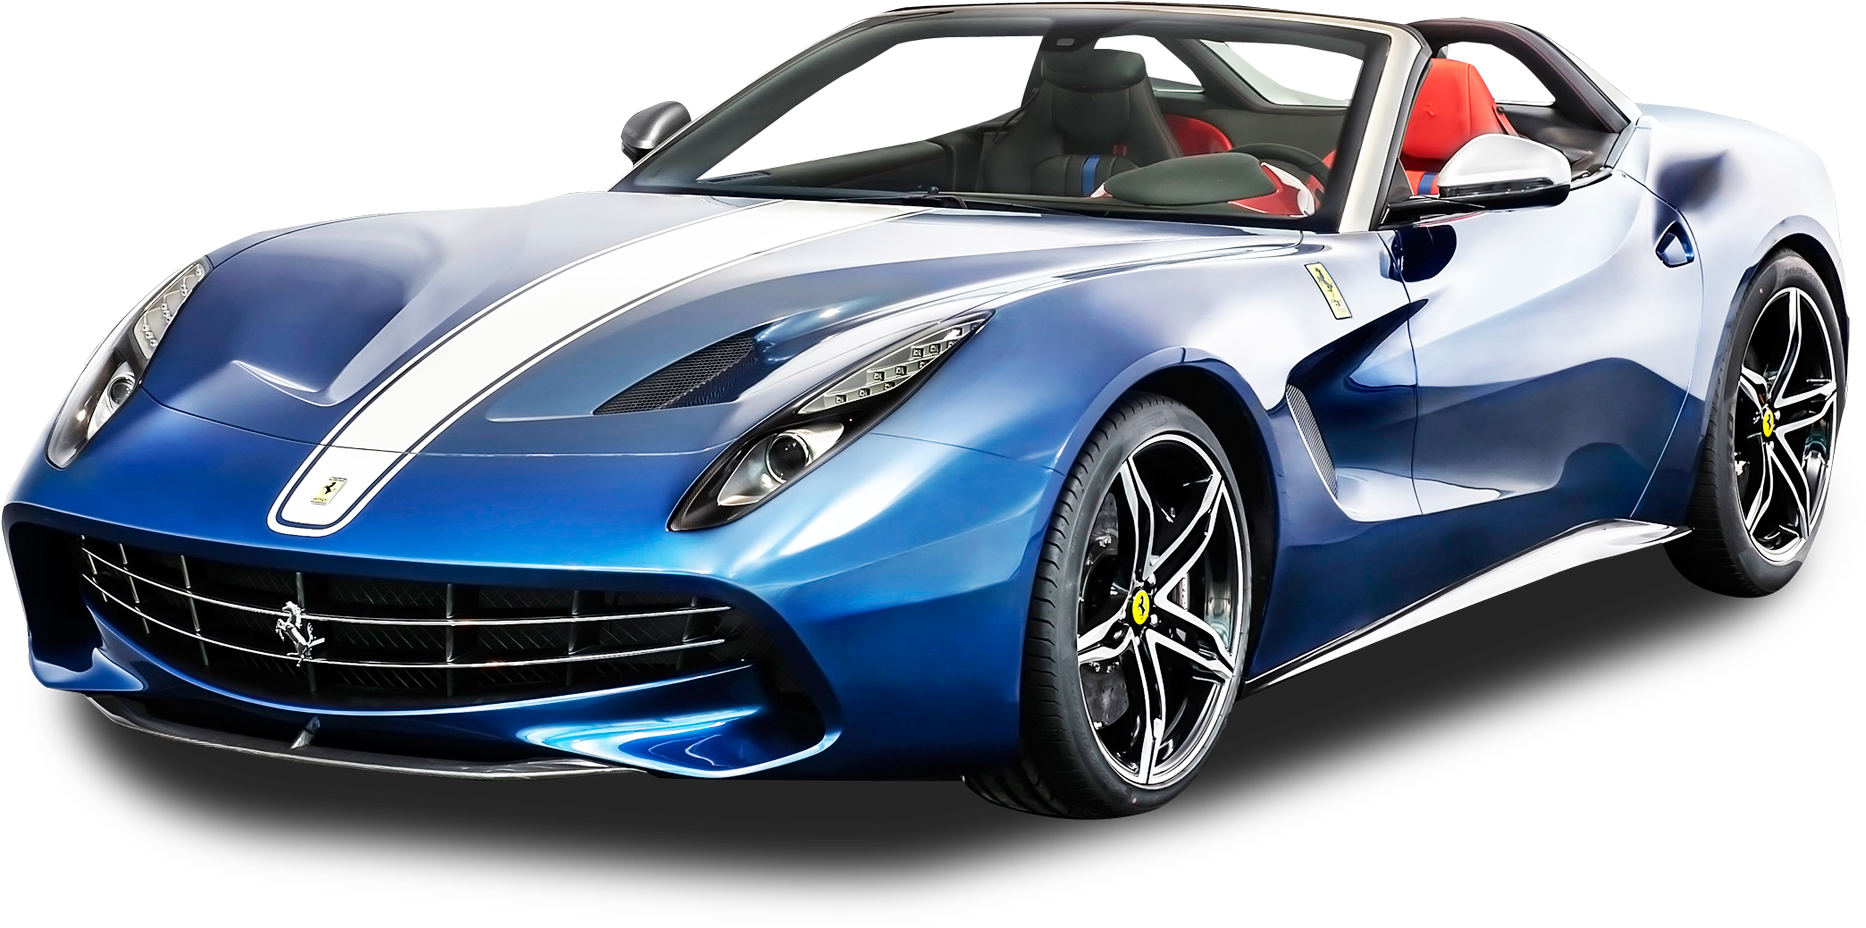 Blue Ferrari Convertible Sports Car